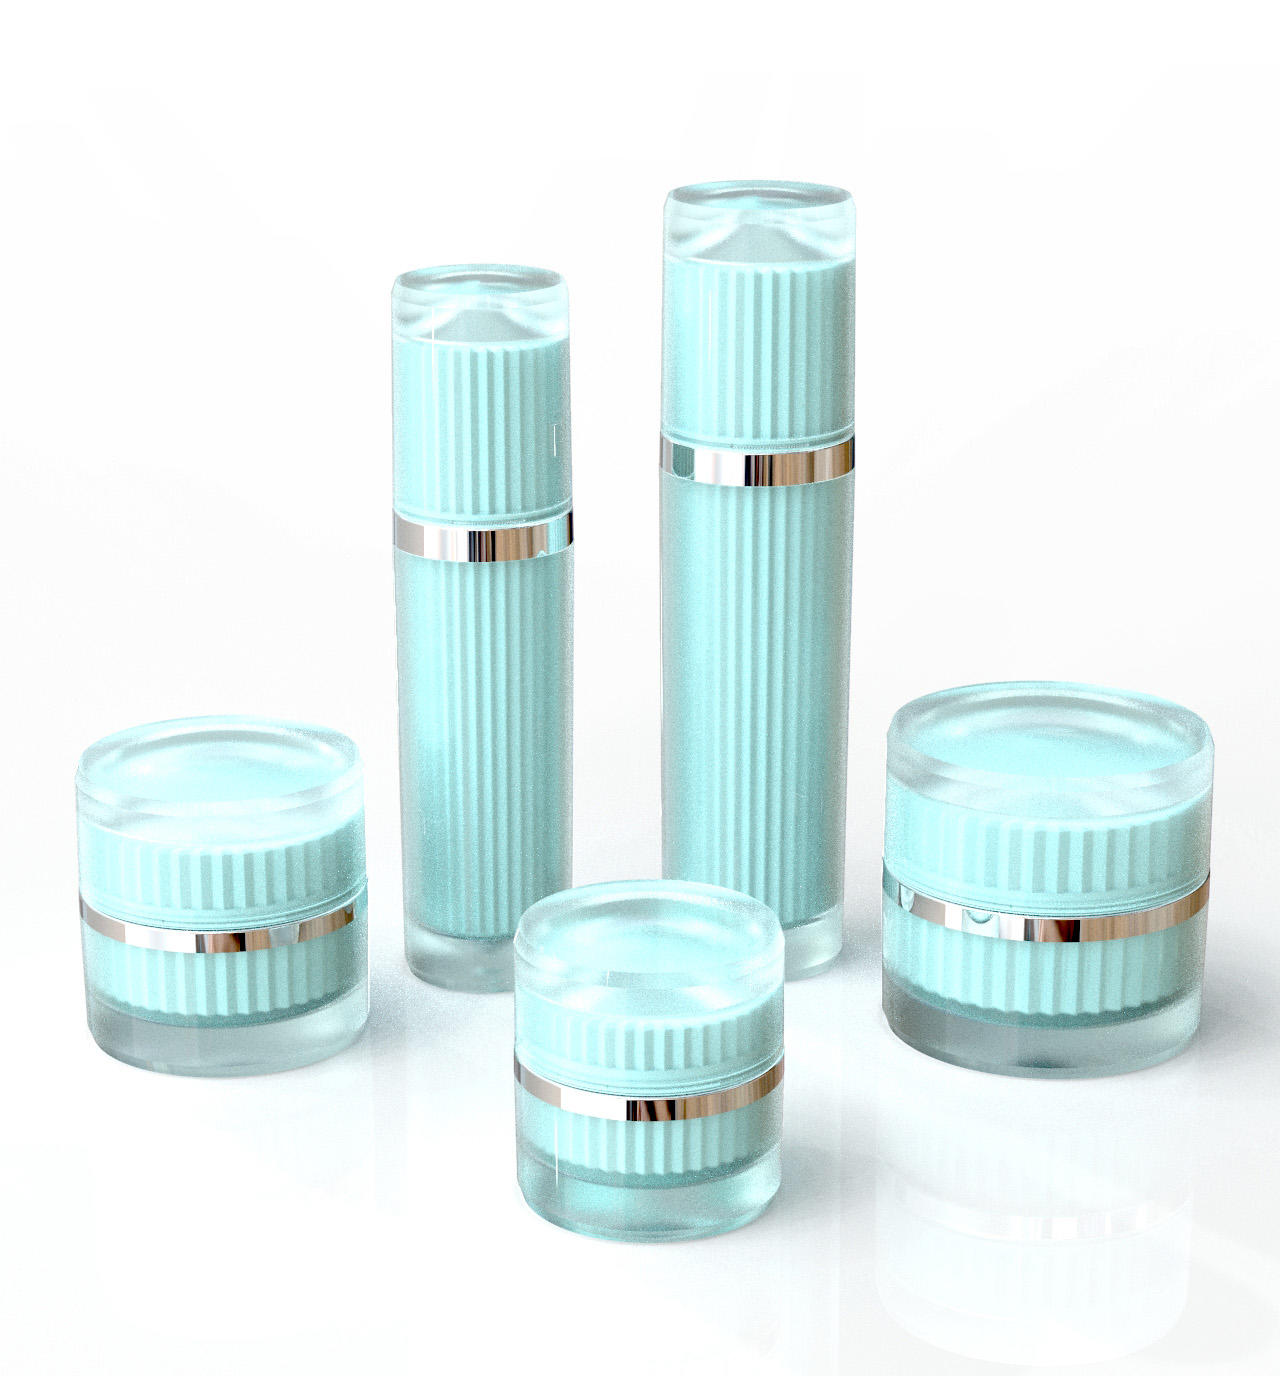 How to prevent photooxidation of acrylic cream jars